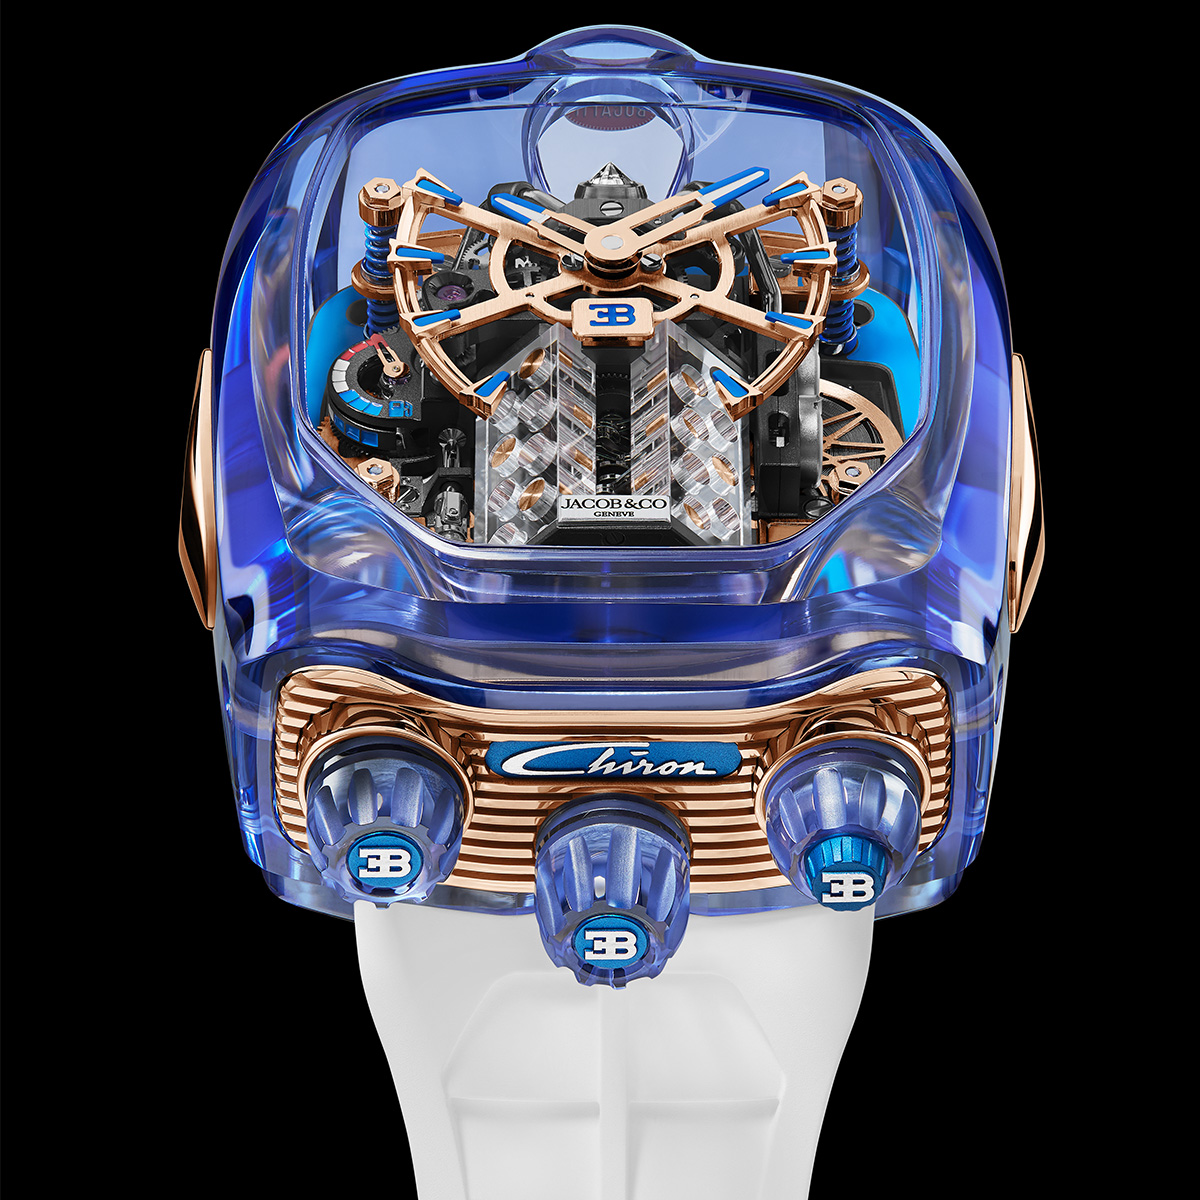 Jacob & Co.’s New Bugatti Chiron Tourbillon Mimics The Iconic 16-Cylinder Engine